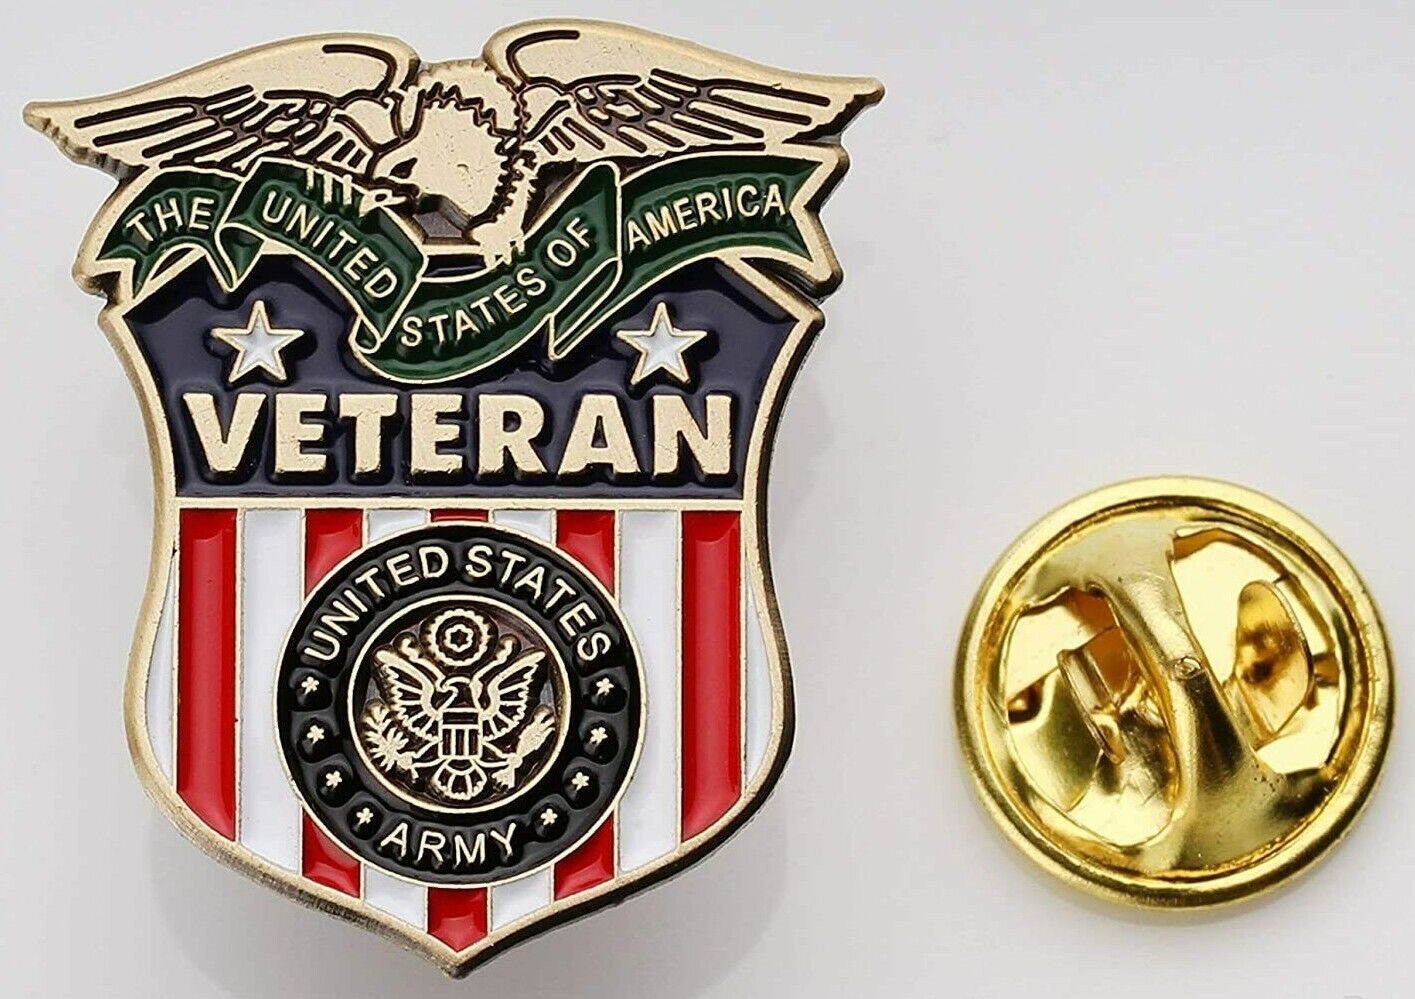 United States Army Veteran Lapel Pin